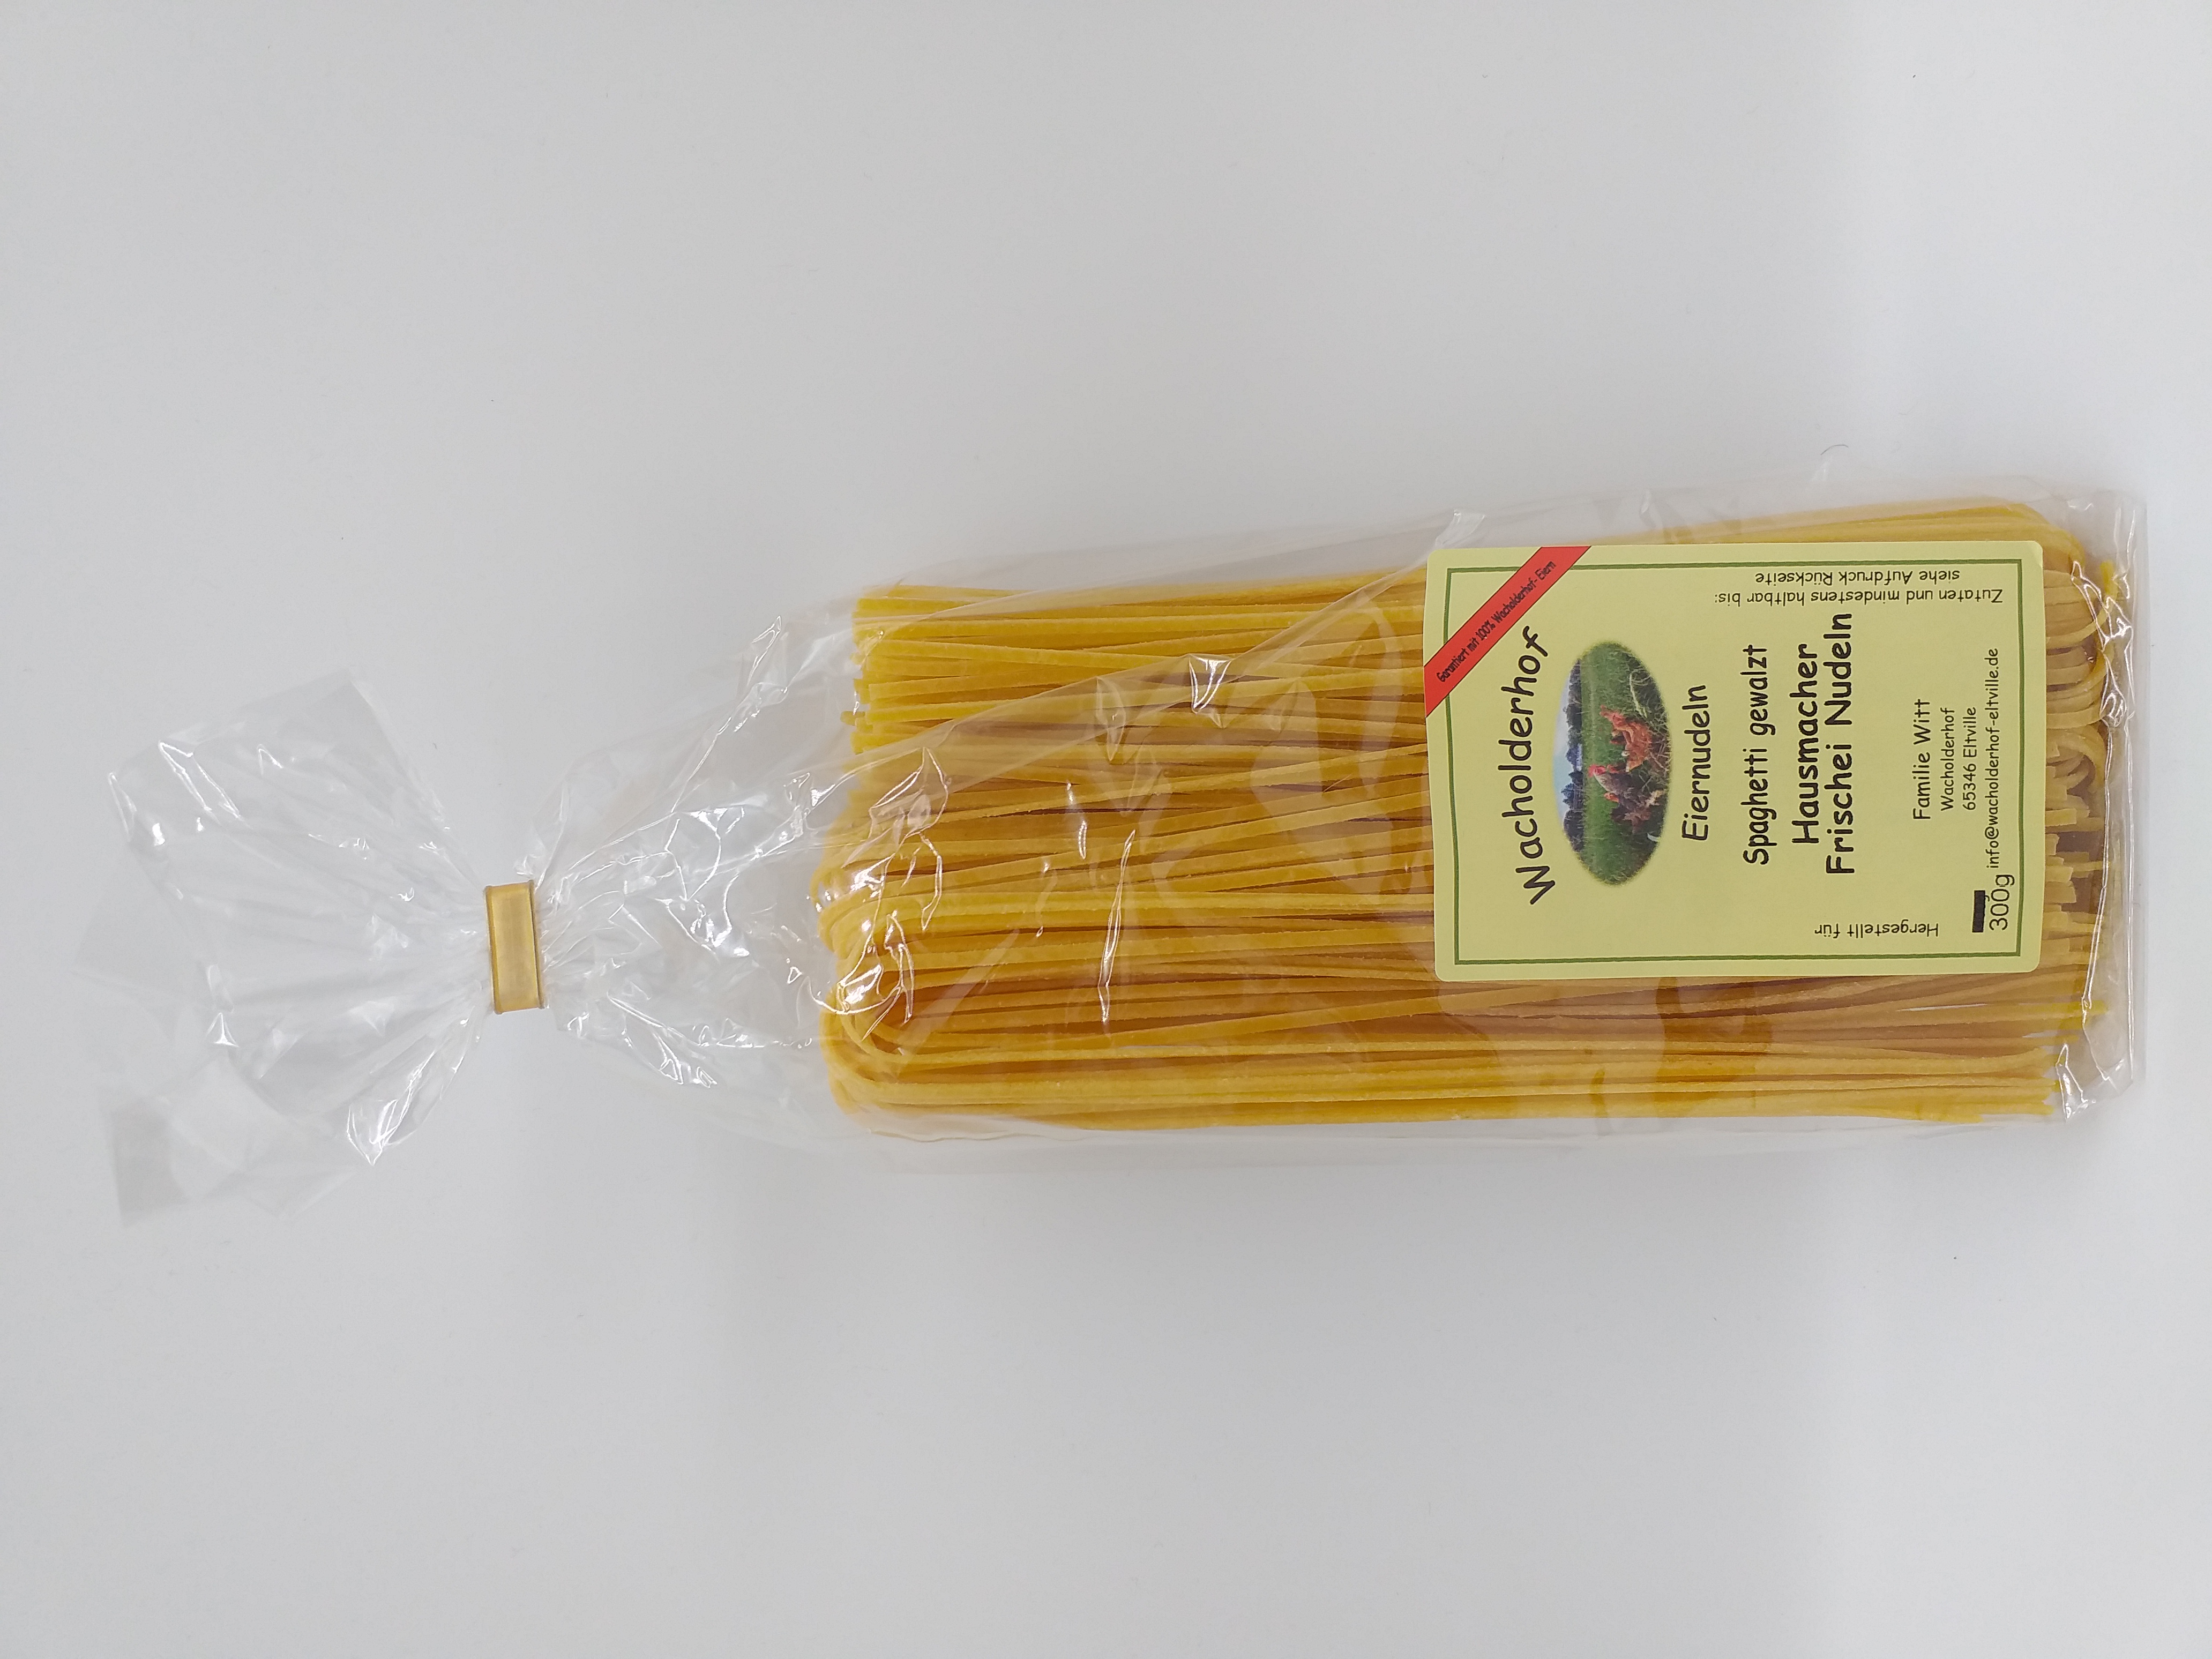 Wacholderhof Spaghetti gewalzt 400g